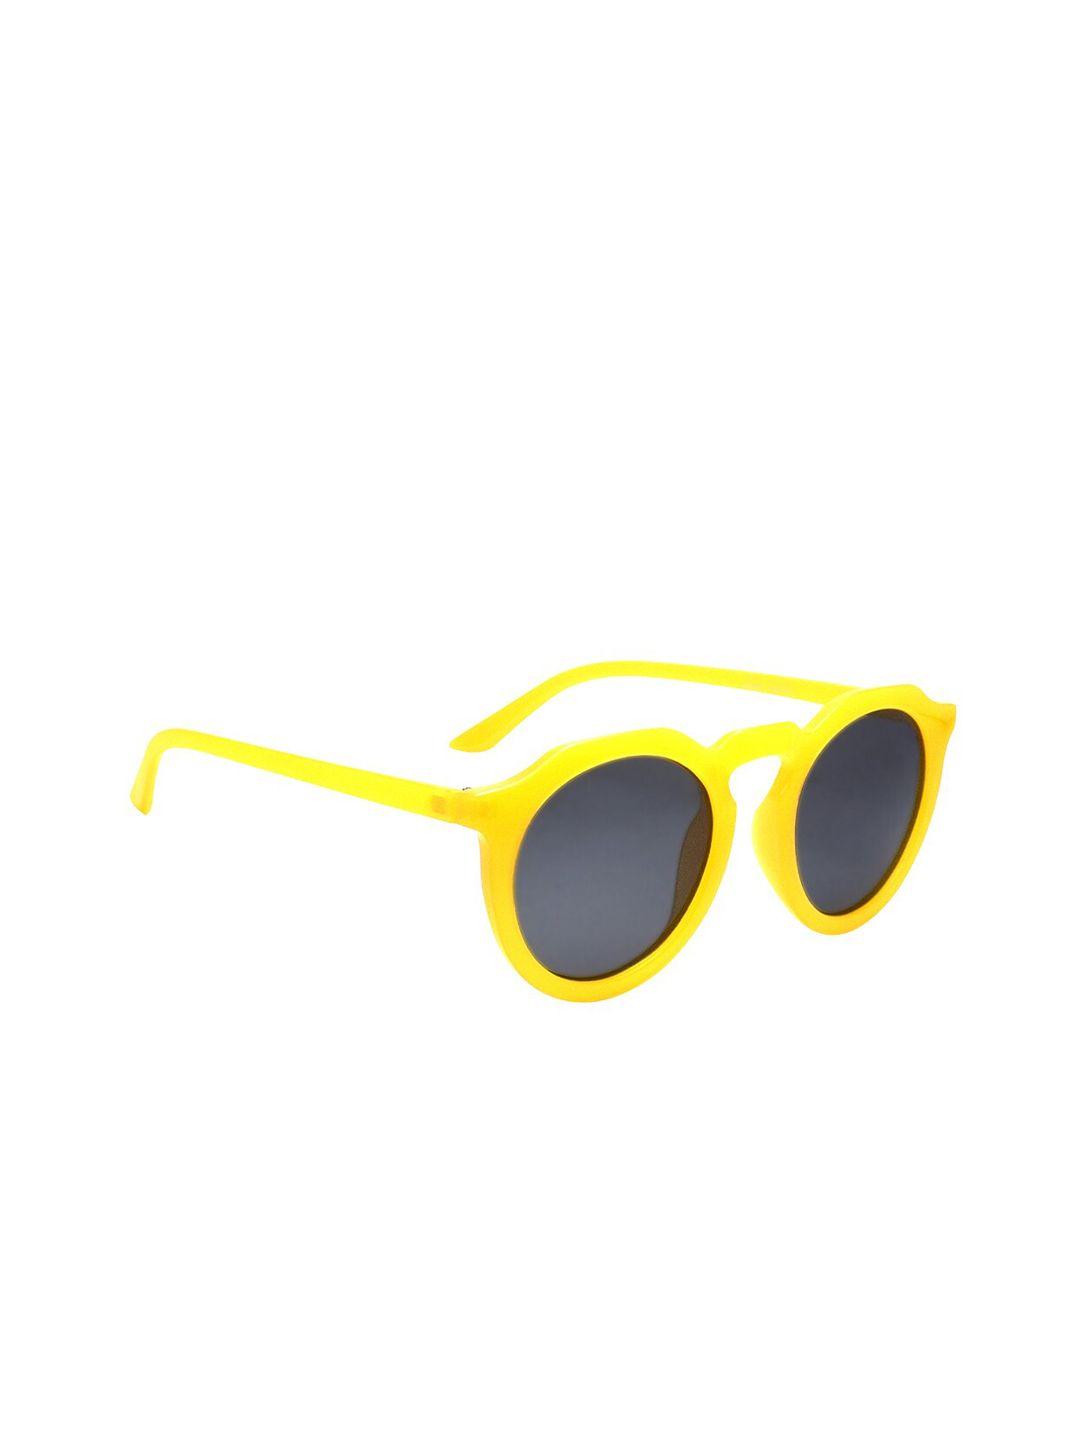 peter jones eyewear lens & round sunglasses with uv protected lens 3319og_s1